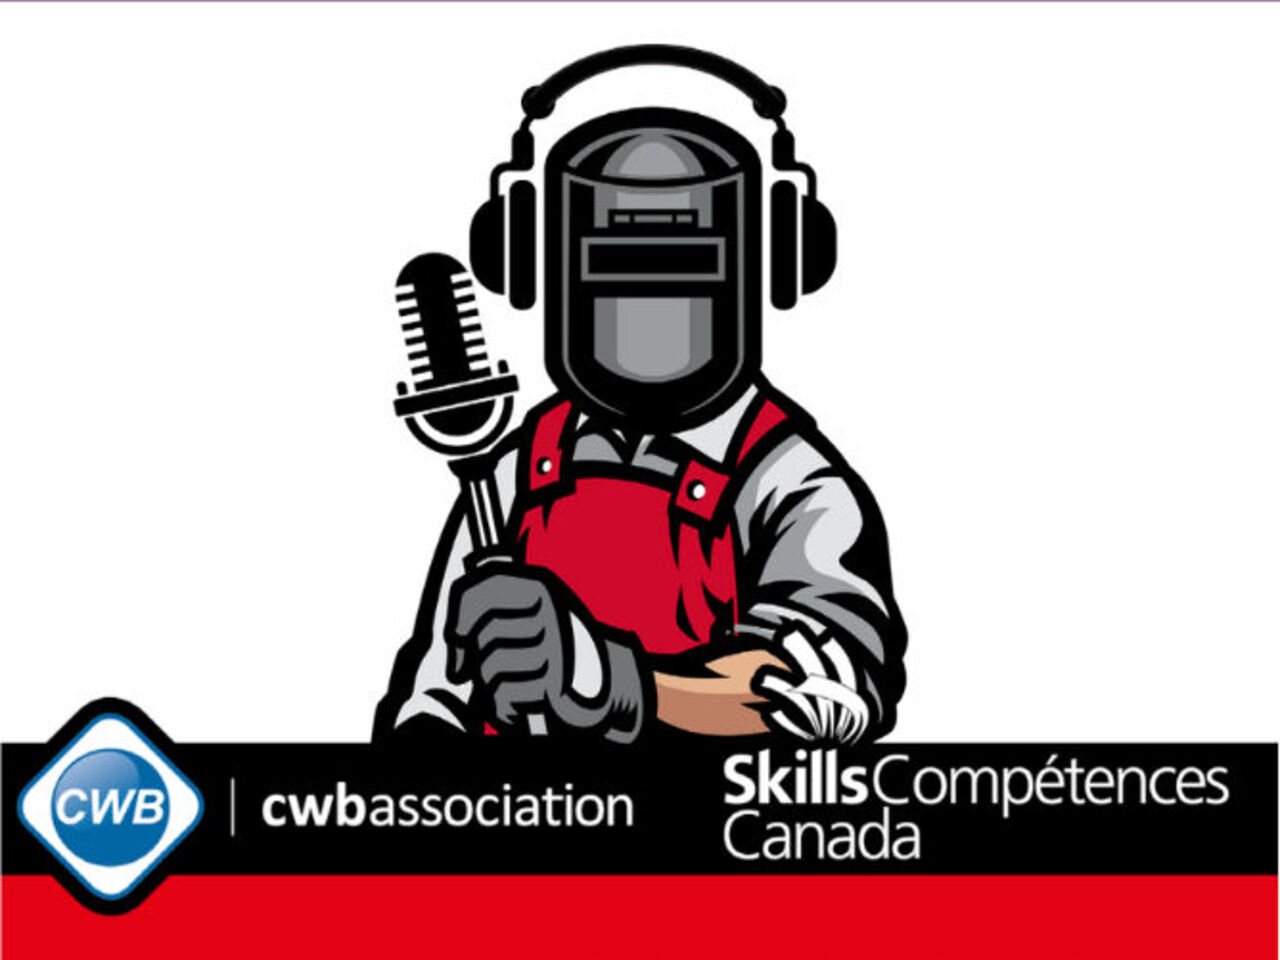 Skills Canada alumni and volunteers share their skills journey